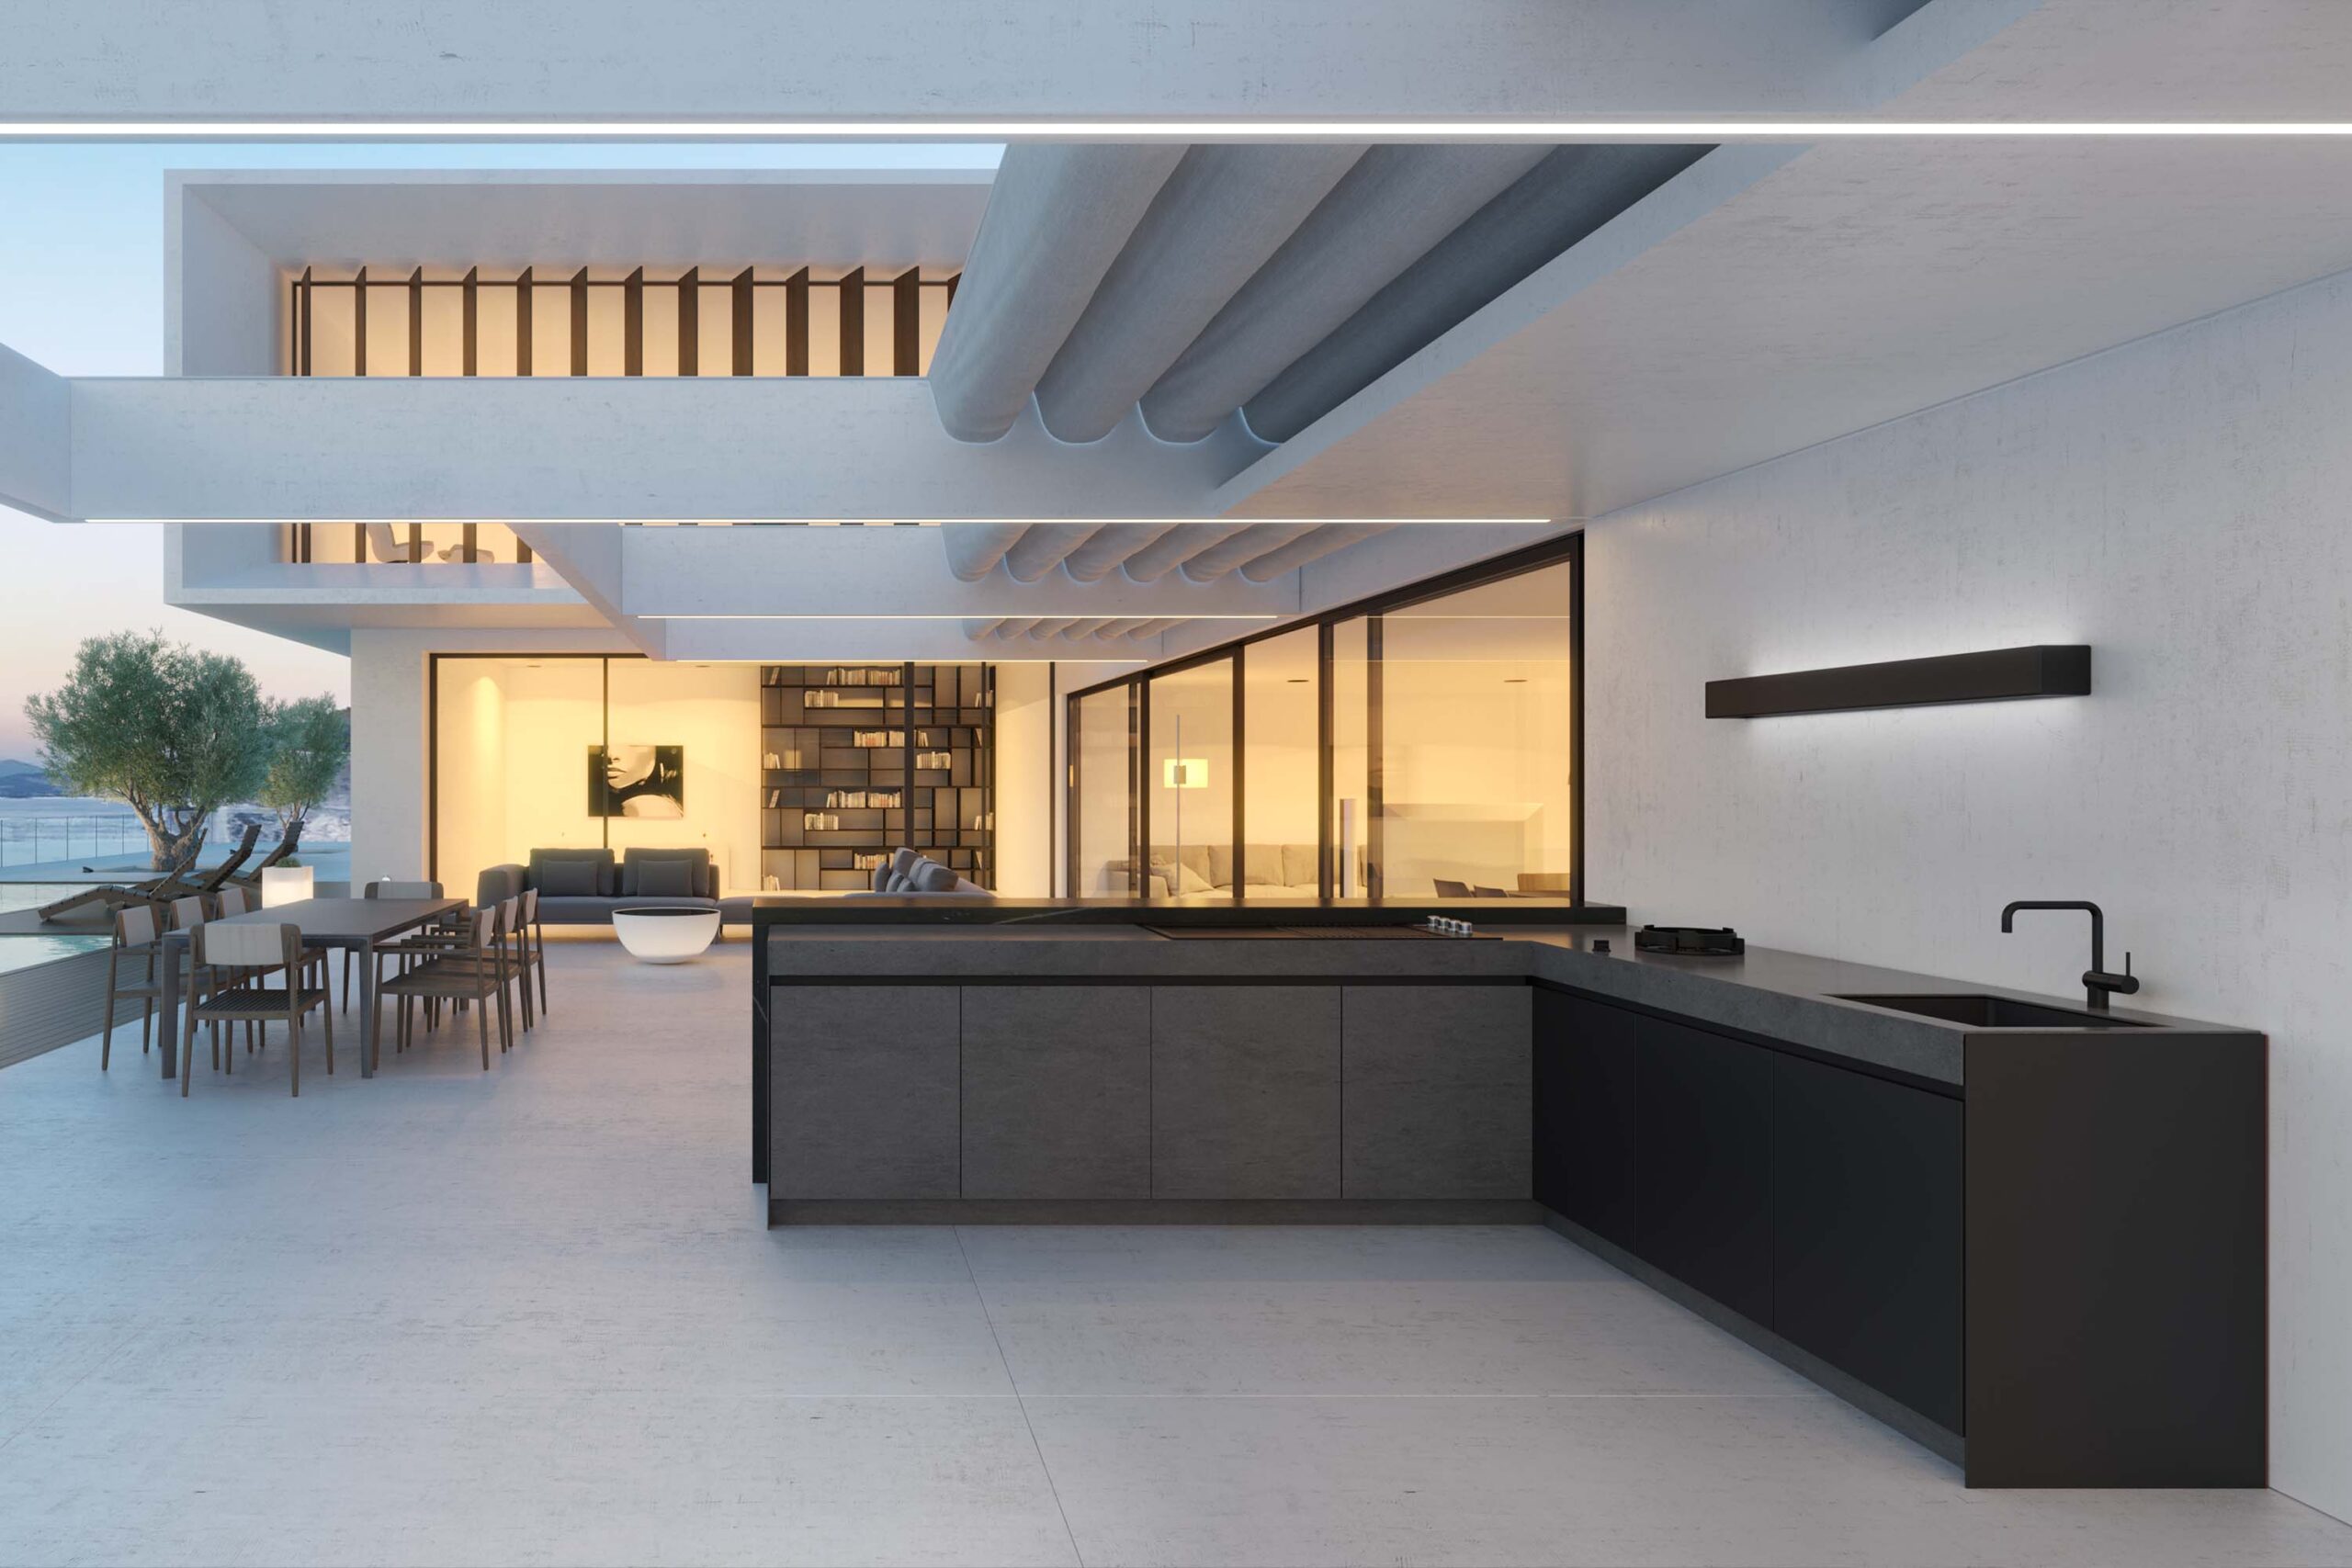 Krieder modern, modular, luxury outdoor kitchen finished in Dekton Kreta concrete effect porcelain.